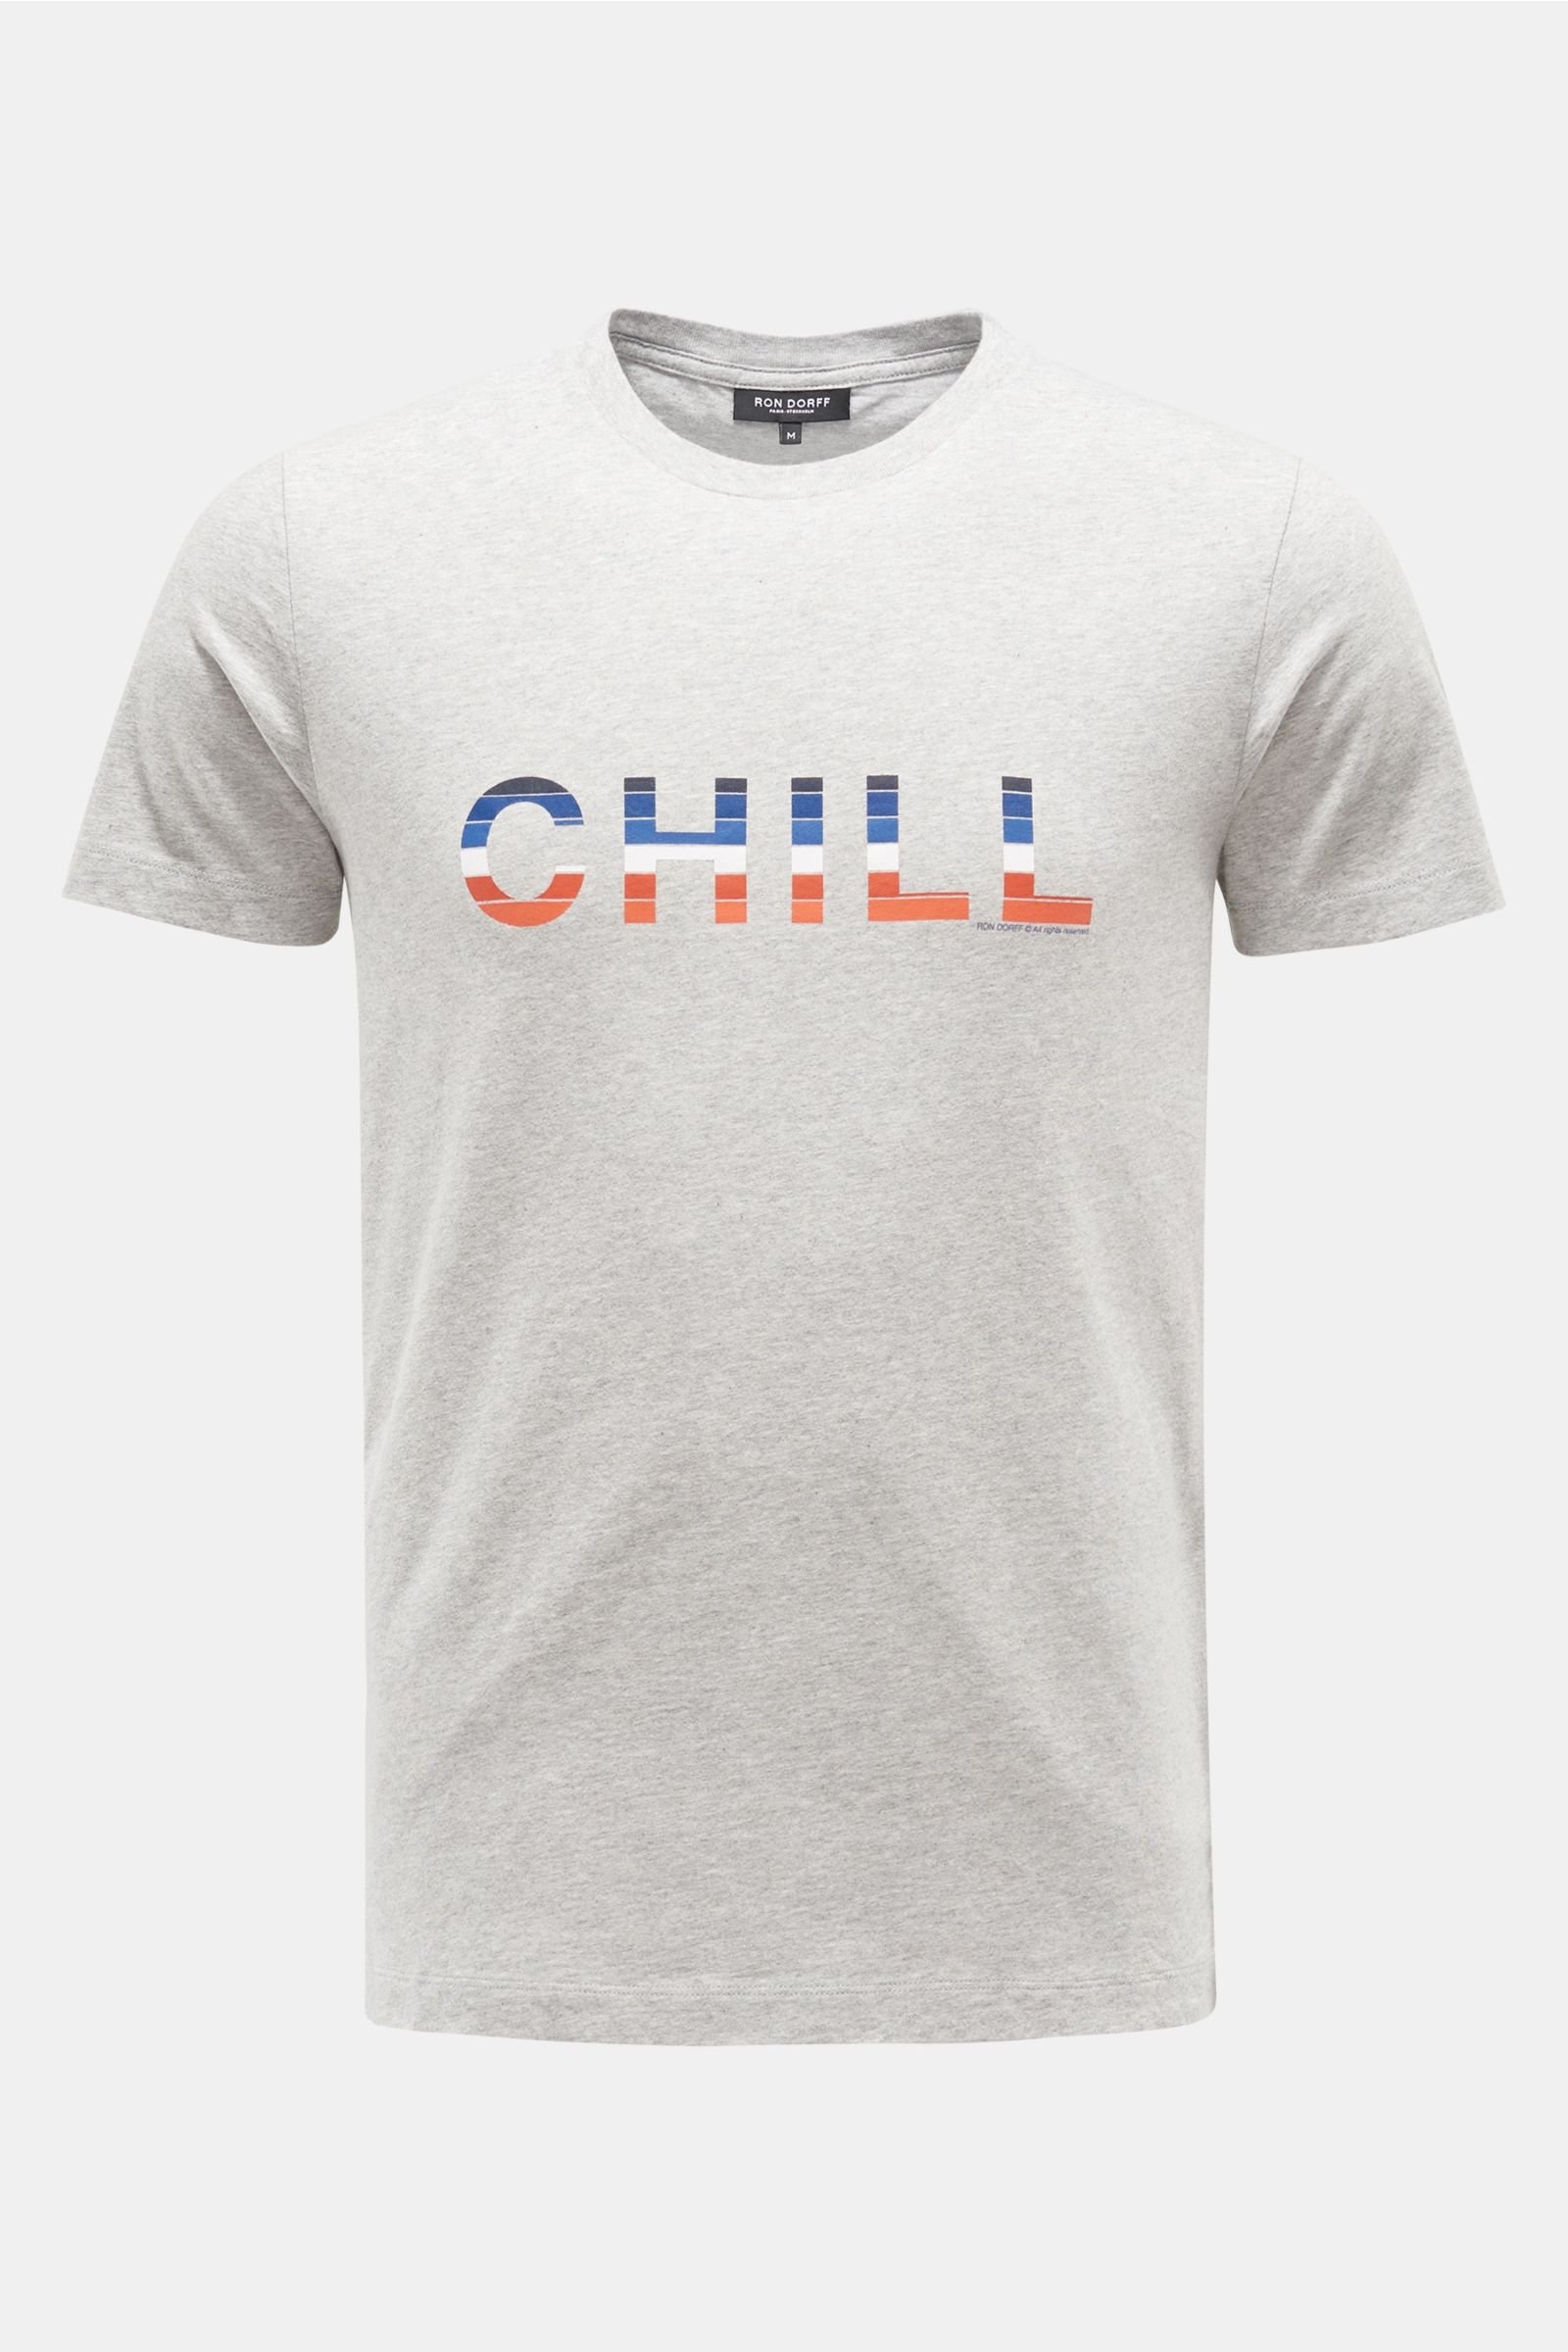 Crew neck T-shirt 'Chill' grey